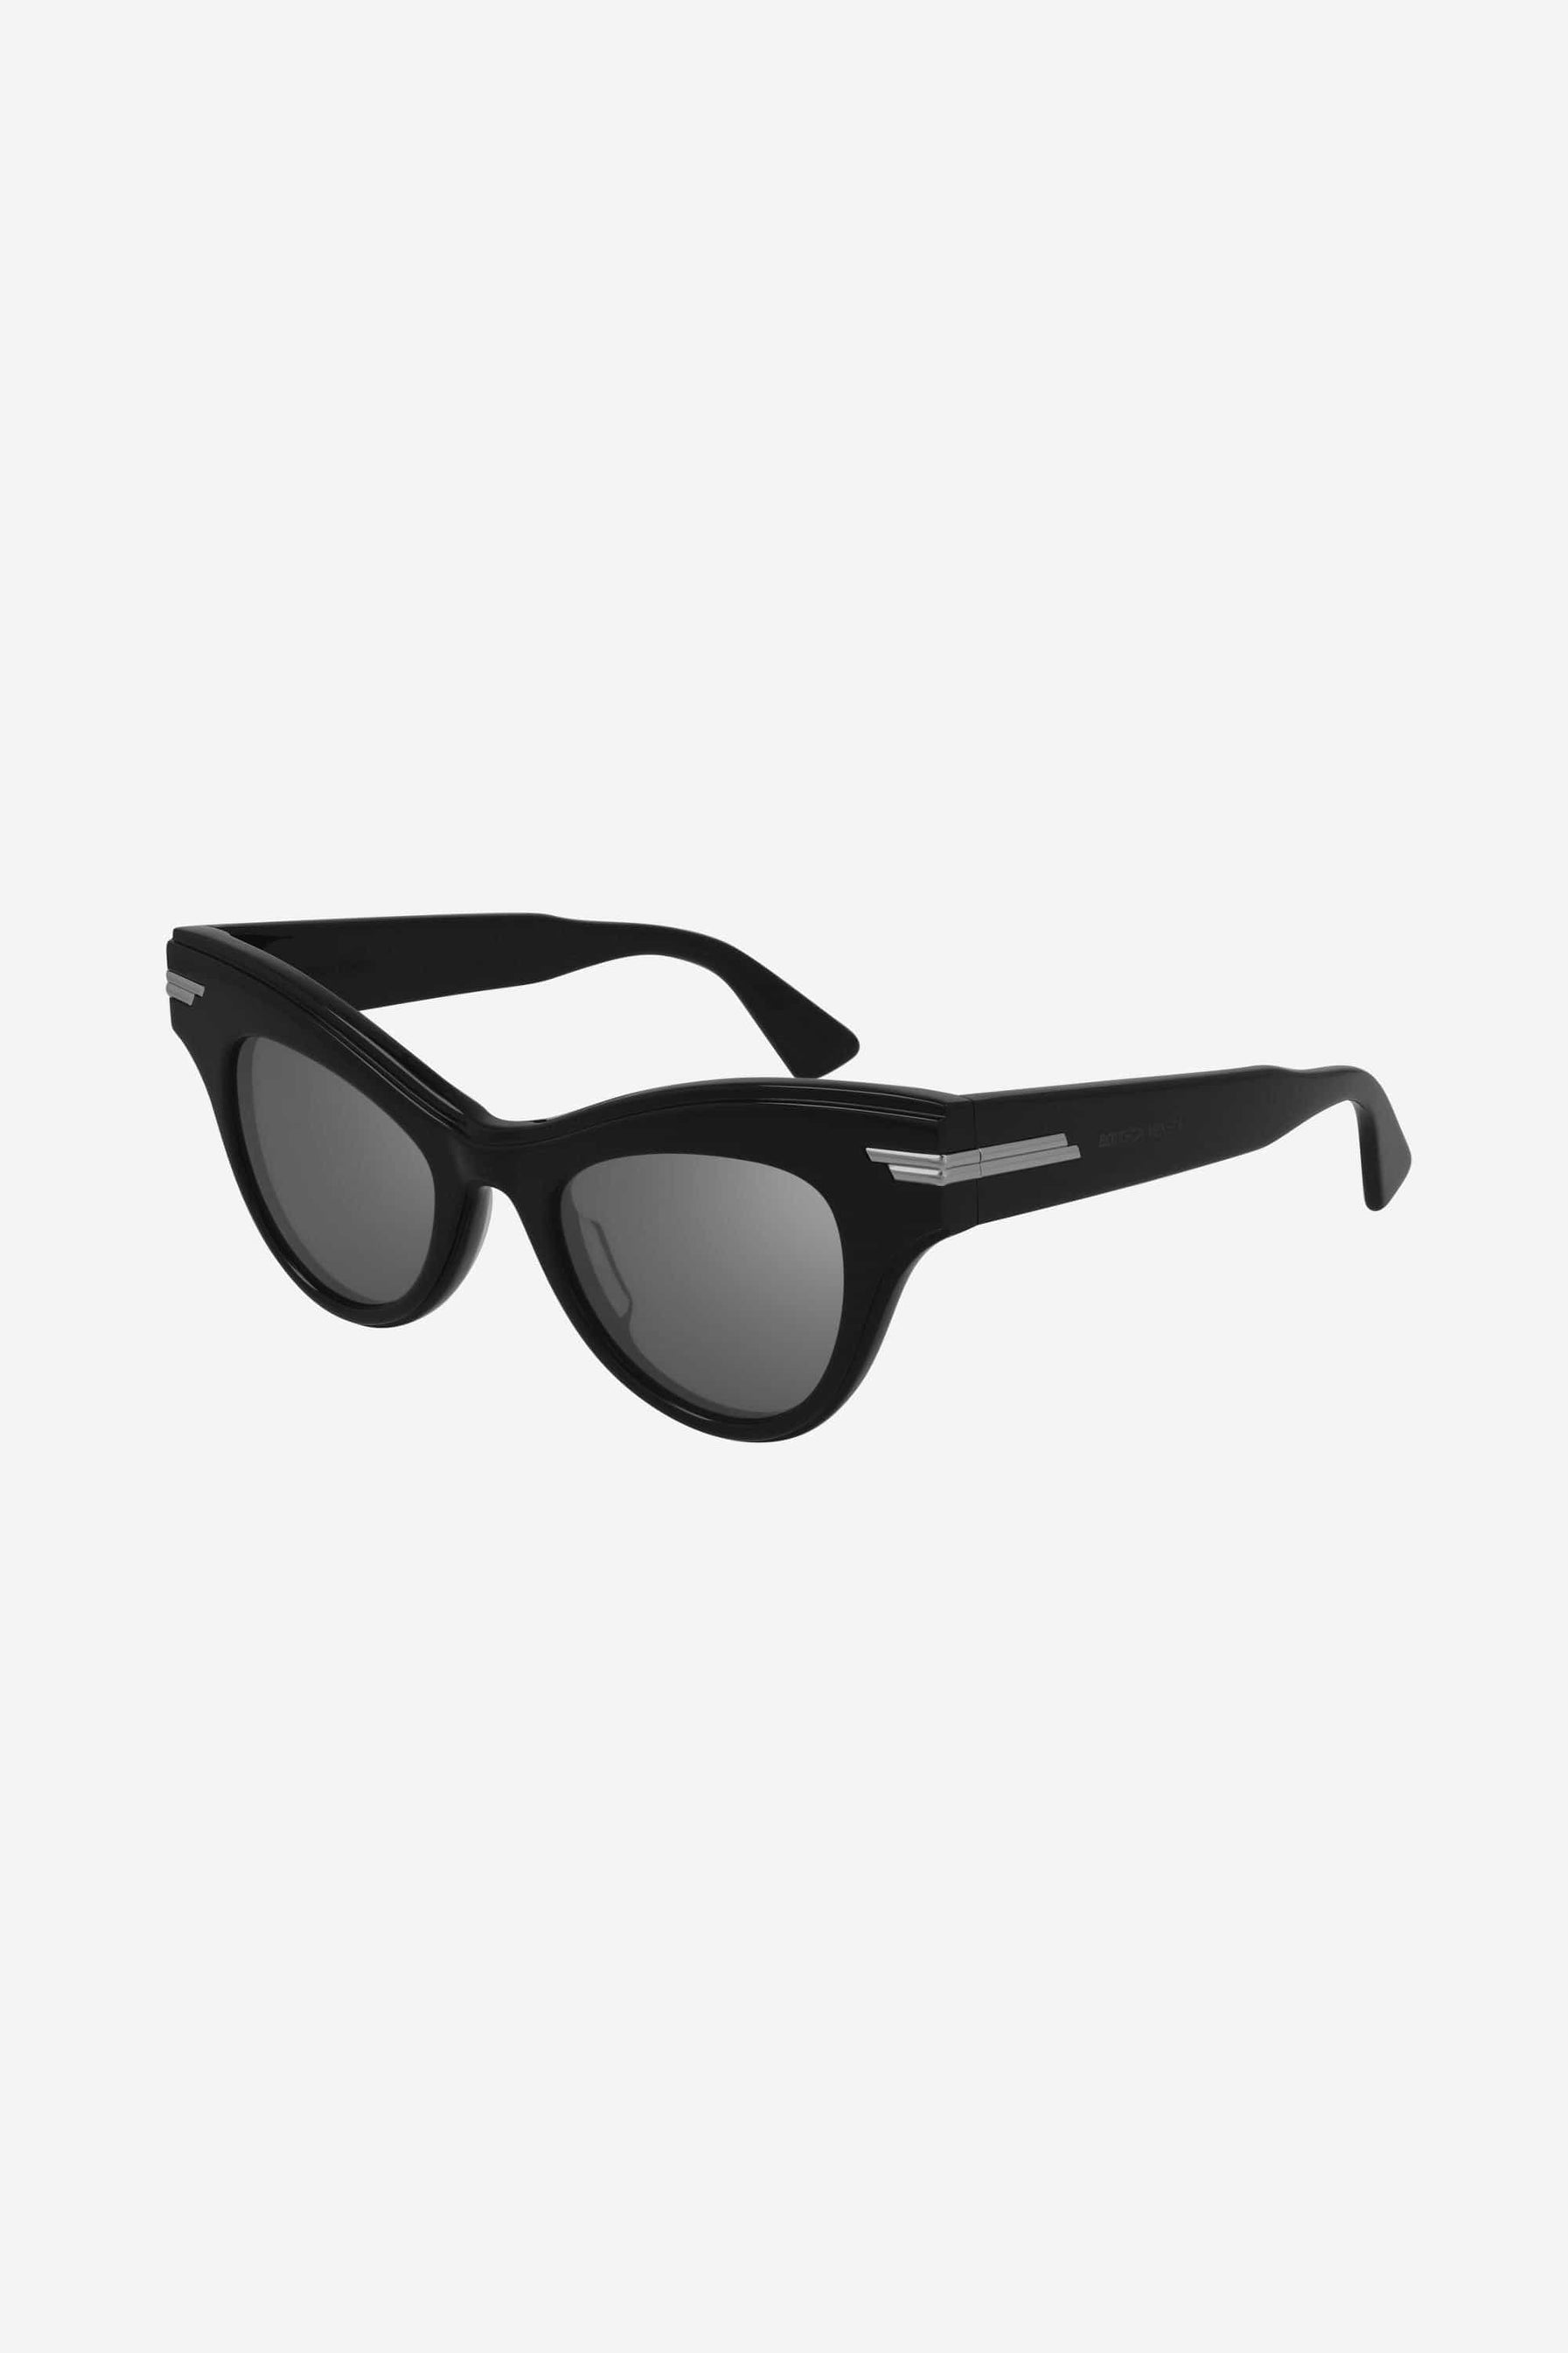 Bottega Veneta black cat eye sunglasses - Eyewear Club